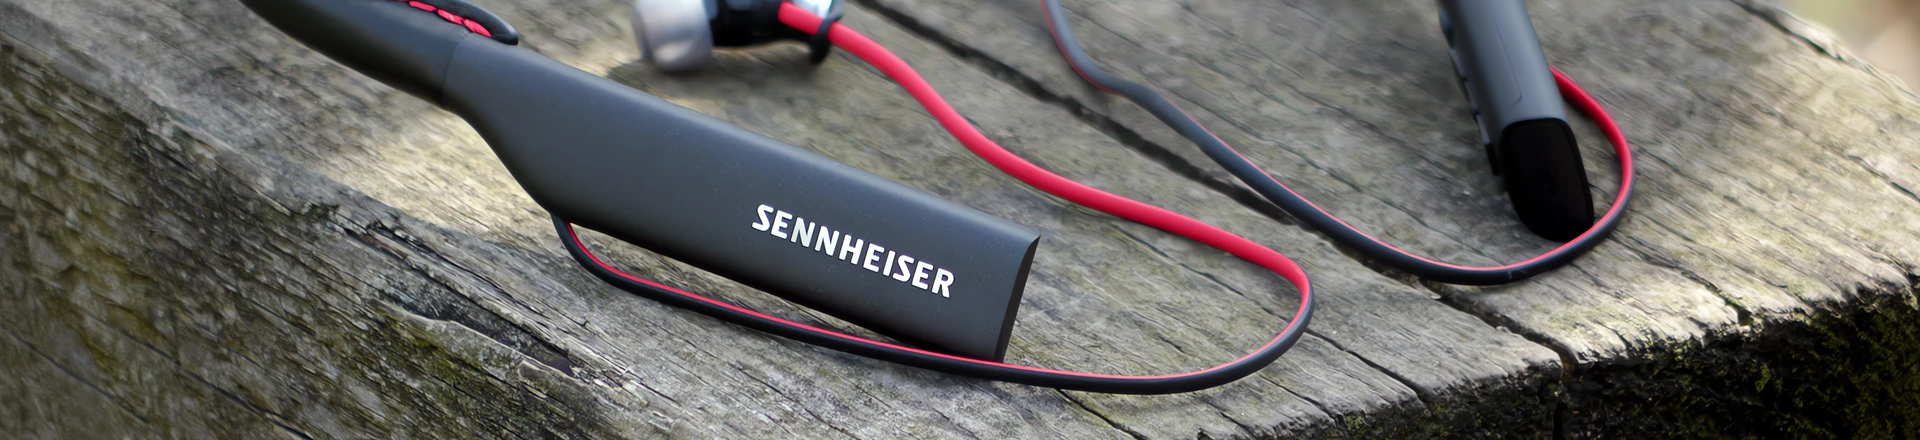 Sennheiser Momentum In-Ear Wireless wyróżnione nagrodą iF Design Award